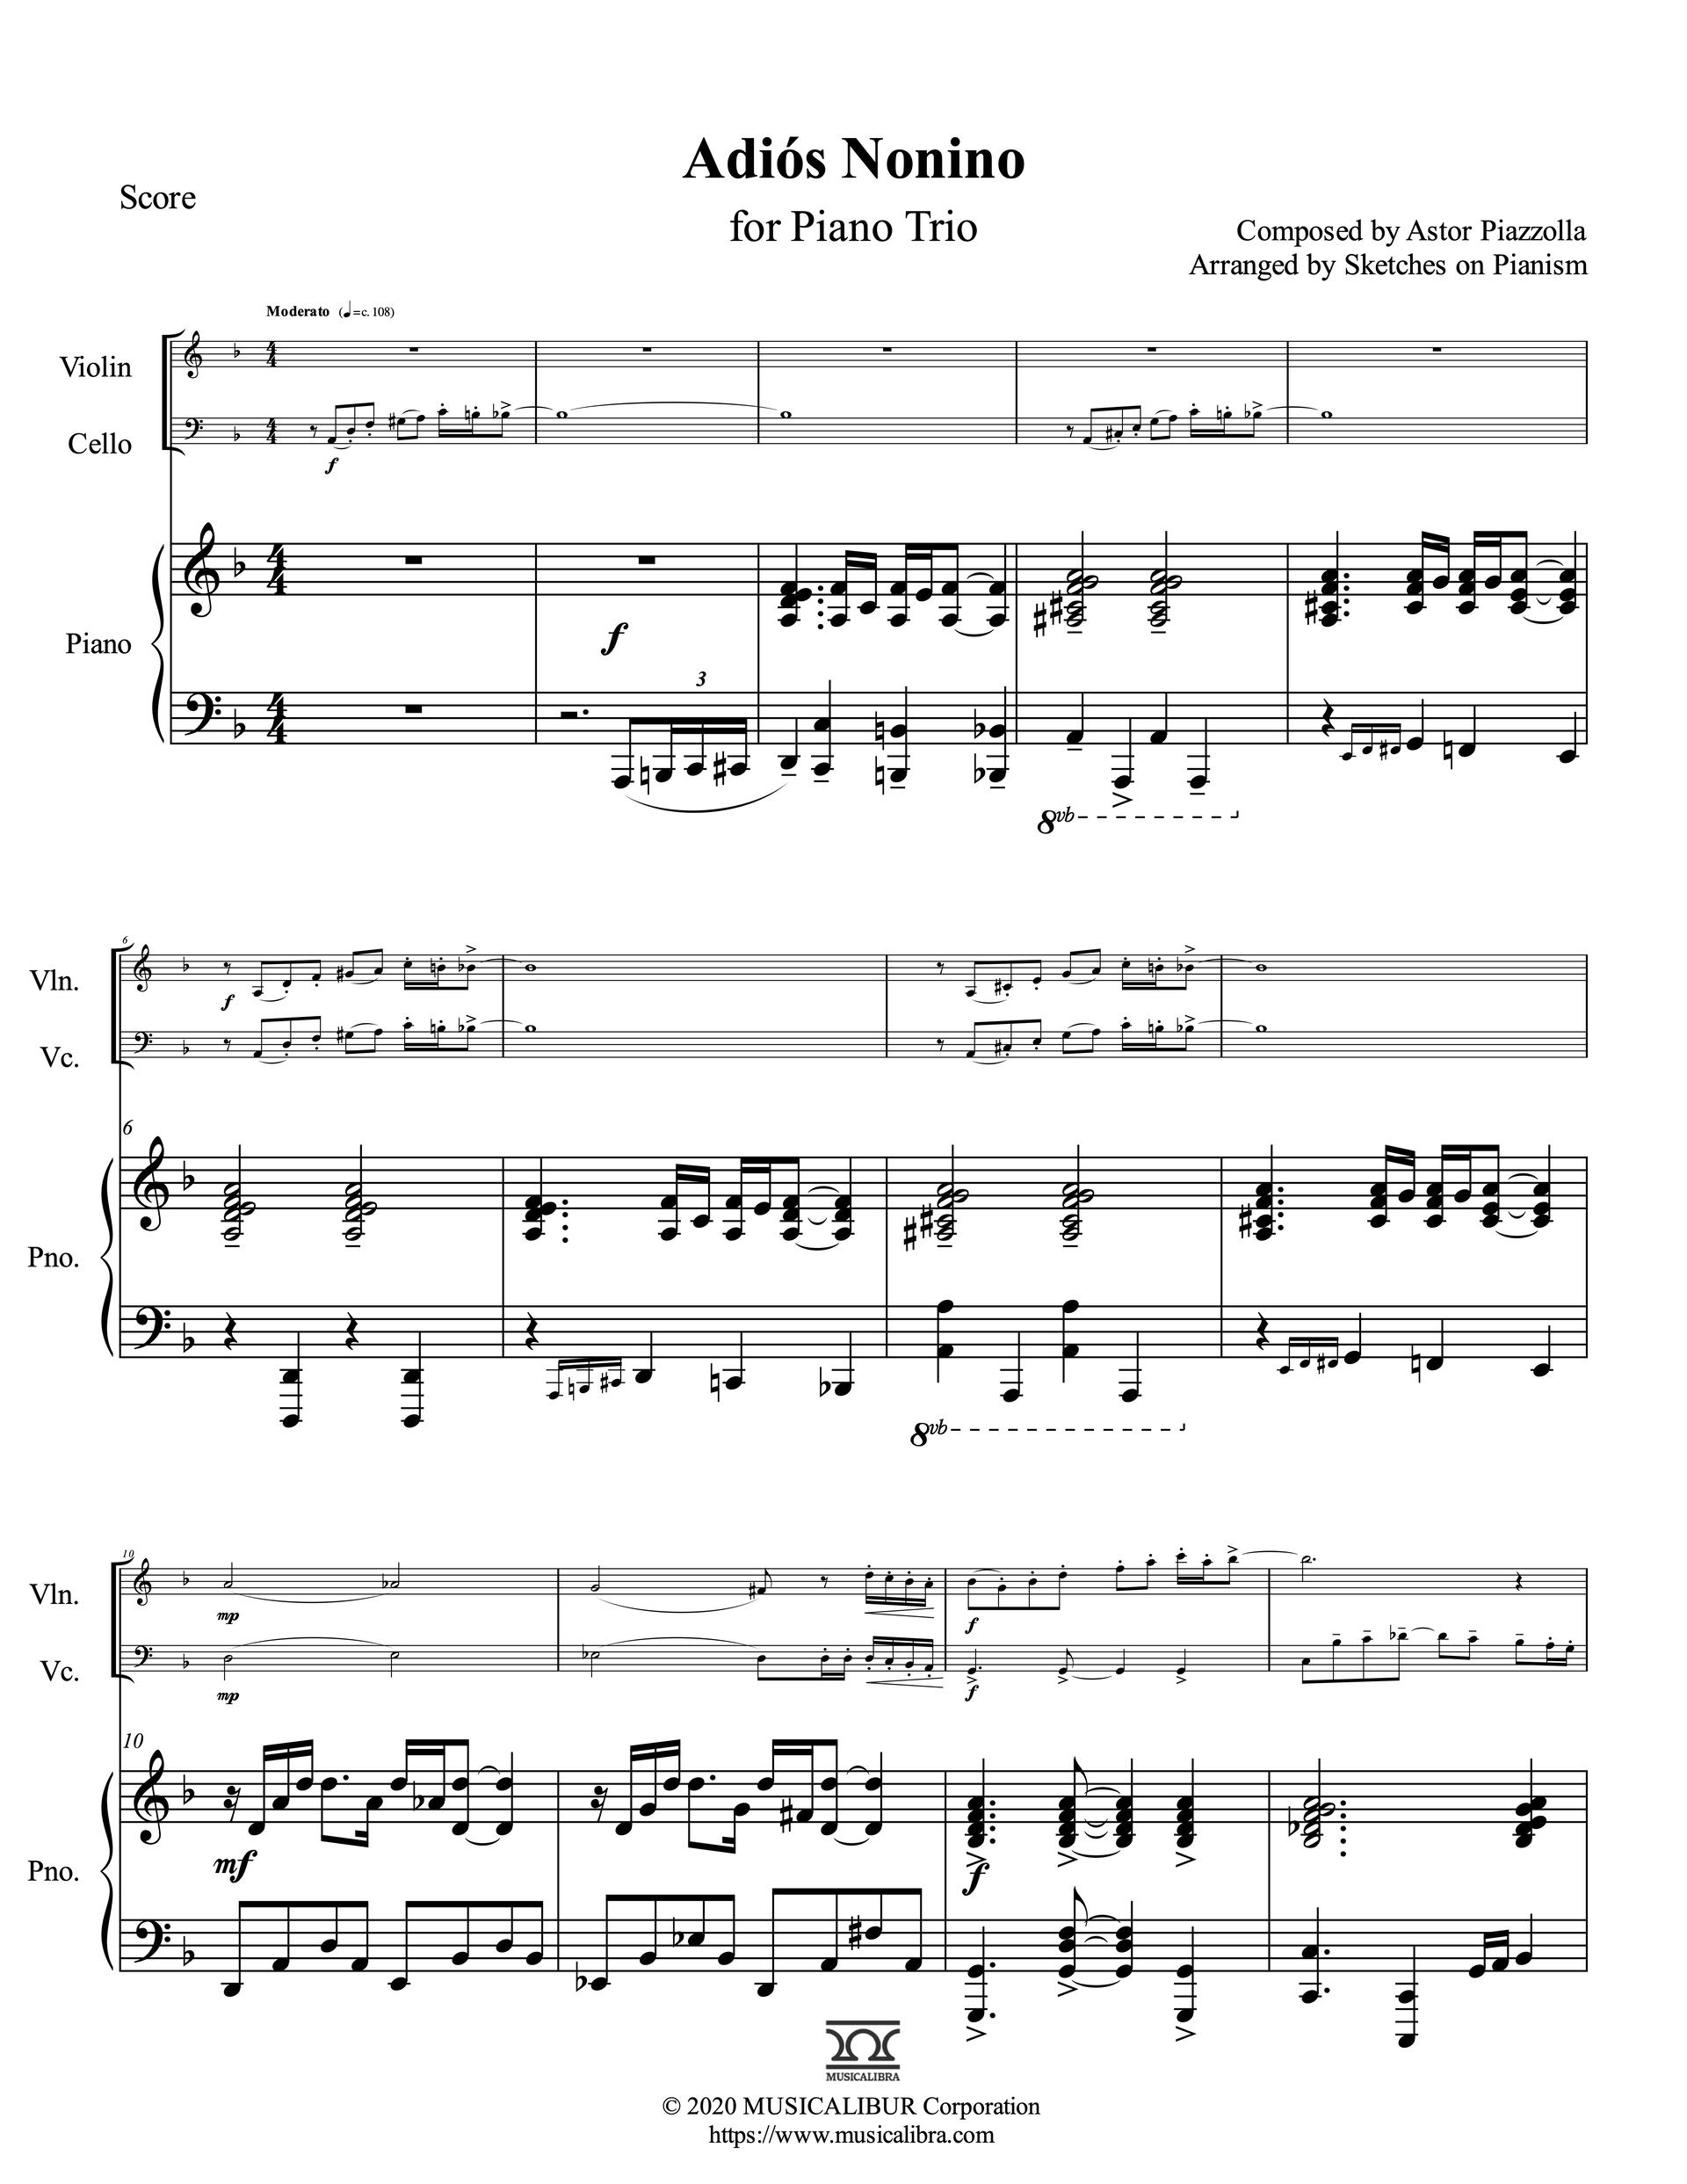 Sheet music of Adiós Nonino arranged for violin, cello and piano trio chamber ensemble preview page 1